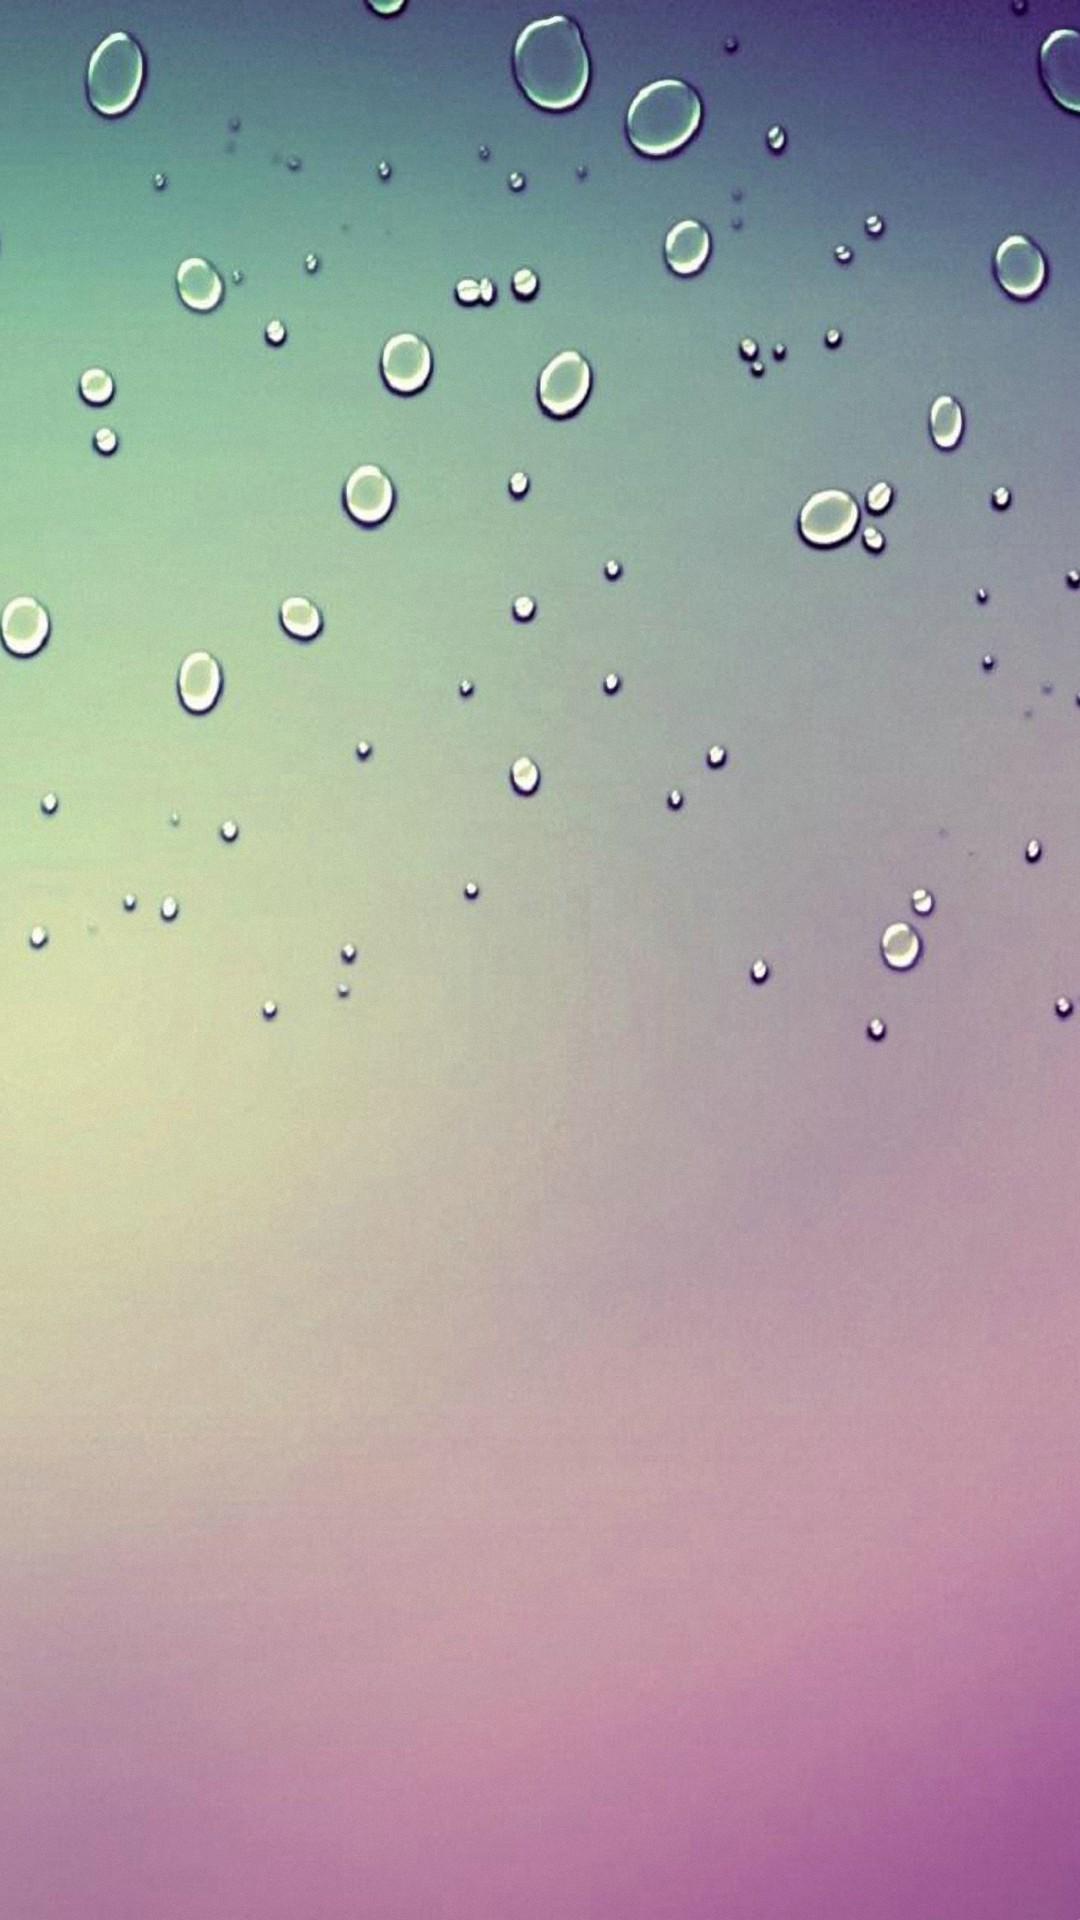 Rain Wallpaper Android Android Wallpaper